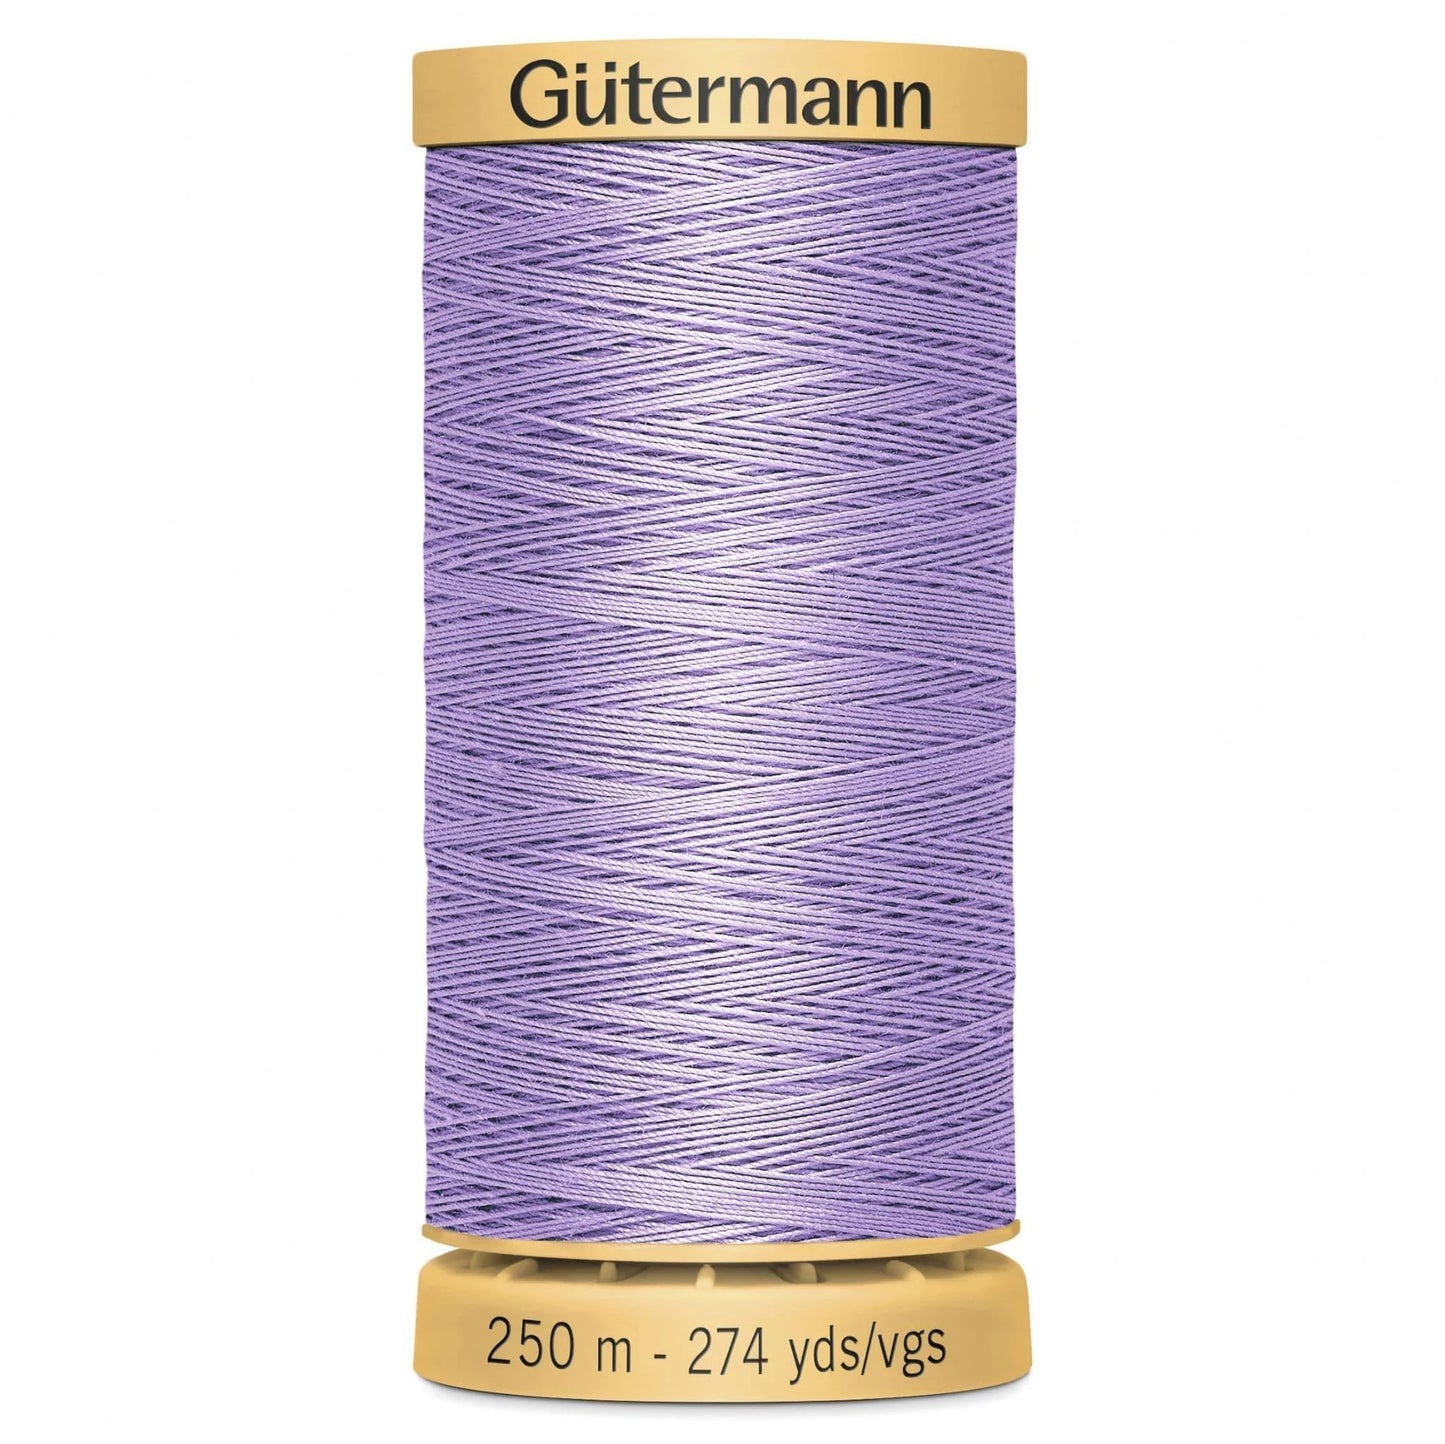 4226 Gutermann Natural Cotton Thread 250m - Light Purple